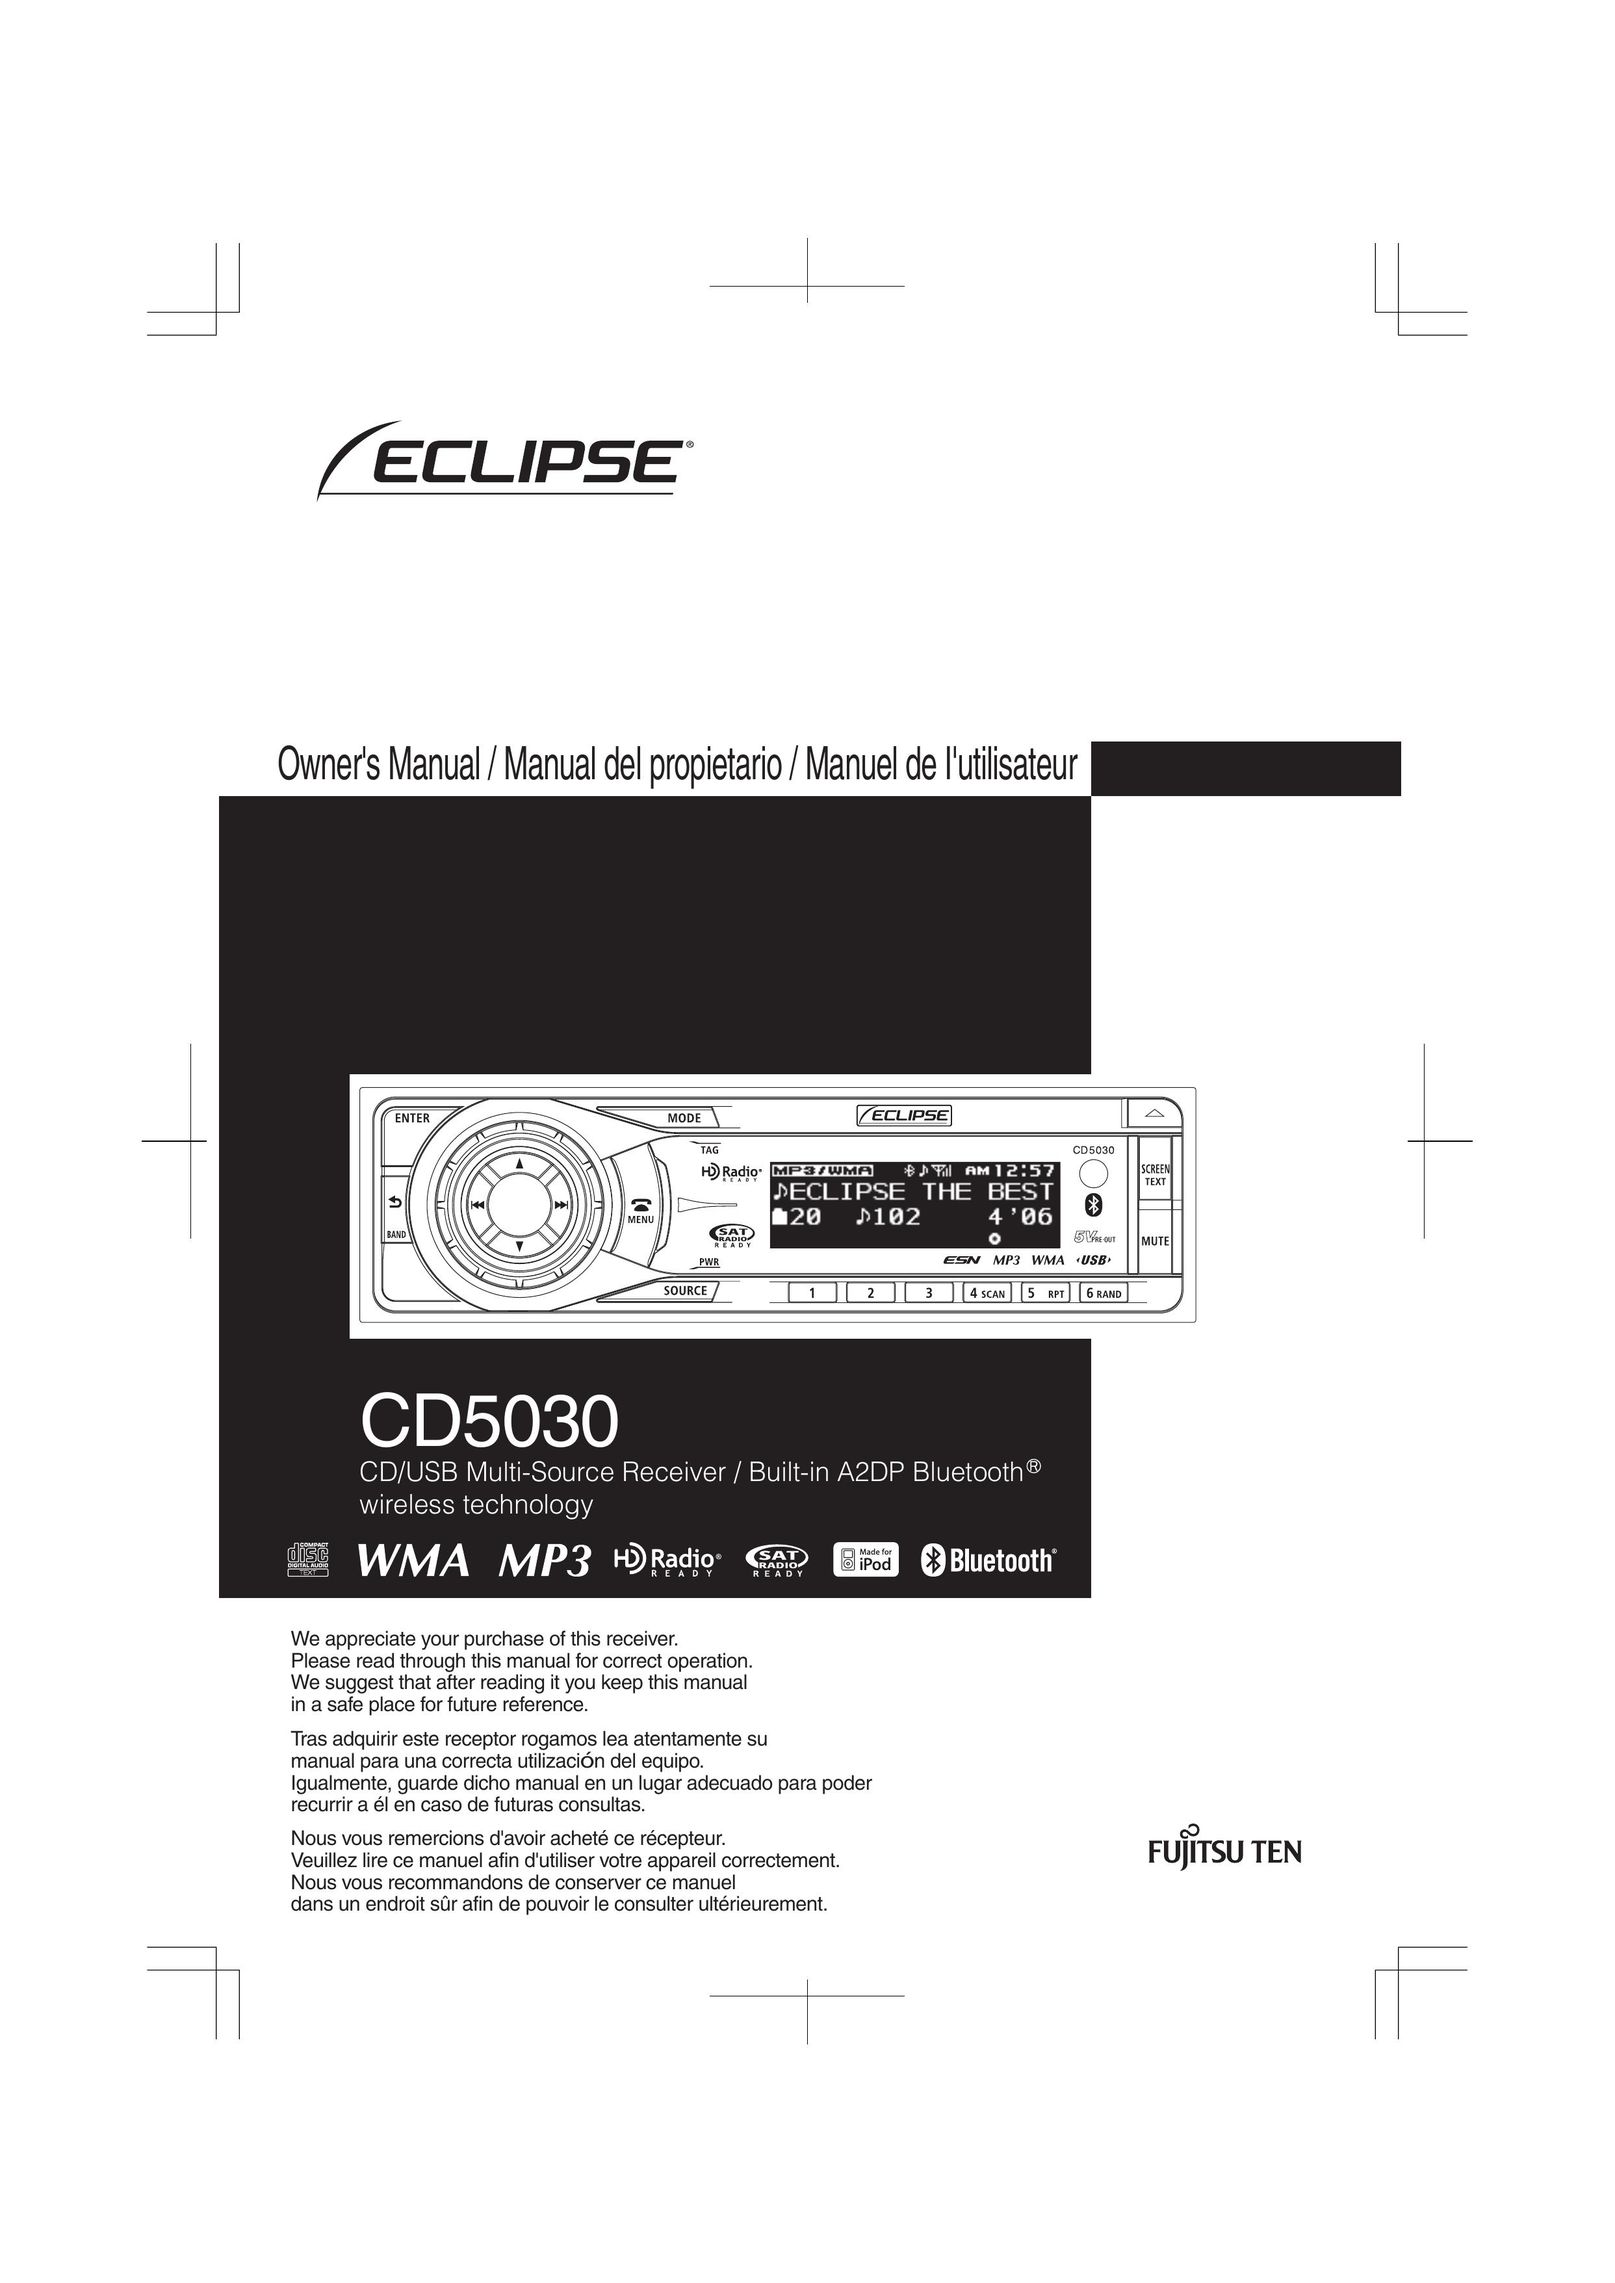 Eclipse - Fujitsu Ten CD5030 Car Stereo System User Manual